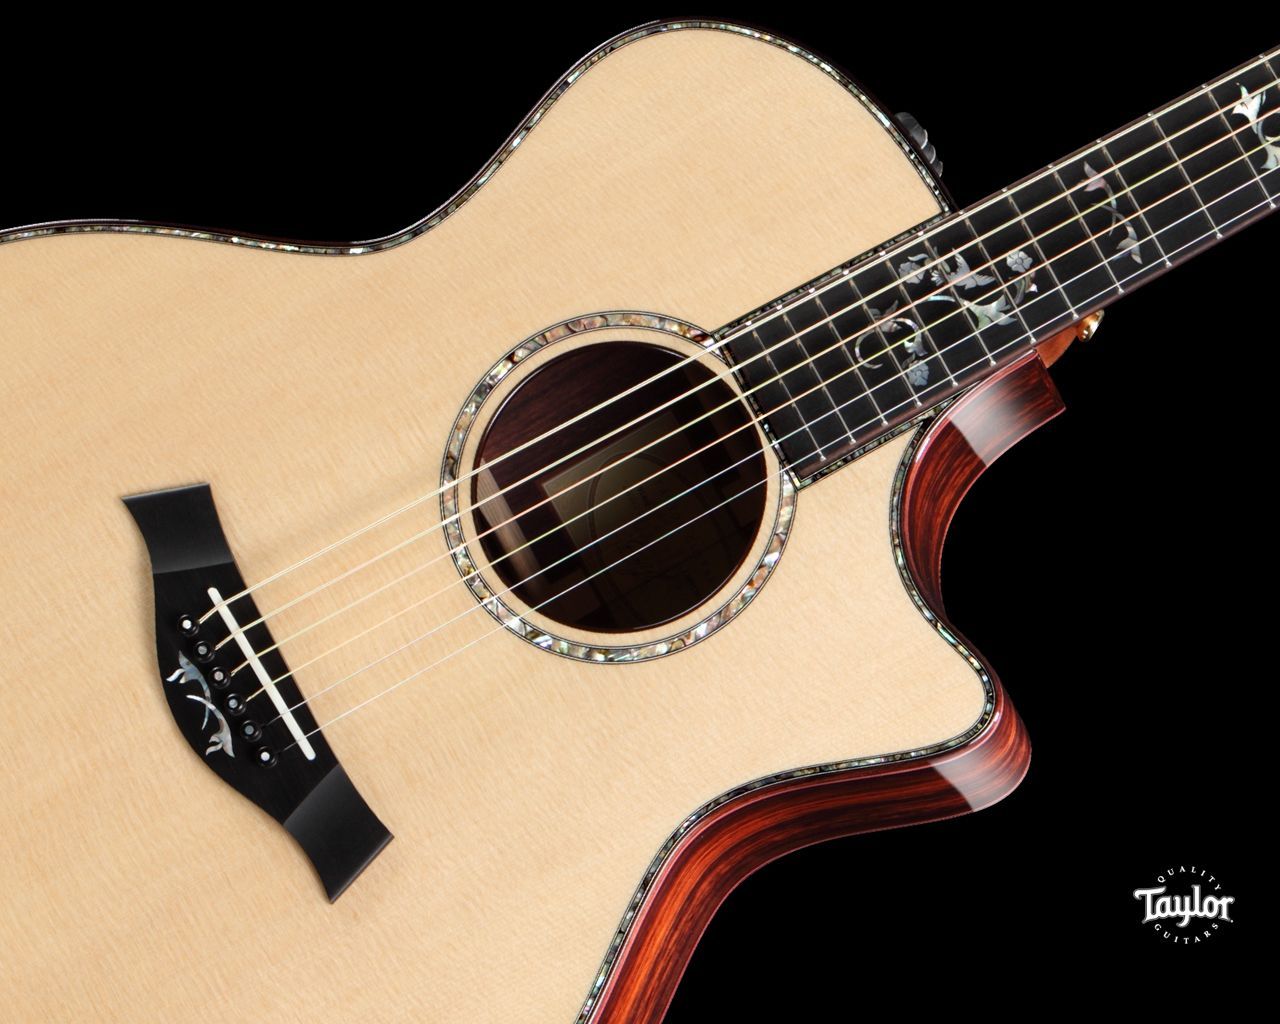 Taylor Guitars Taylor Guitars - Backgrounds